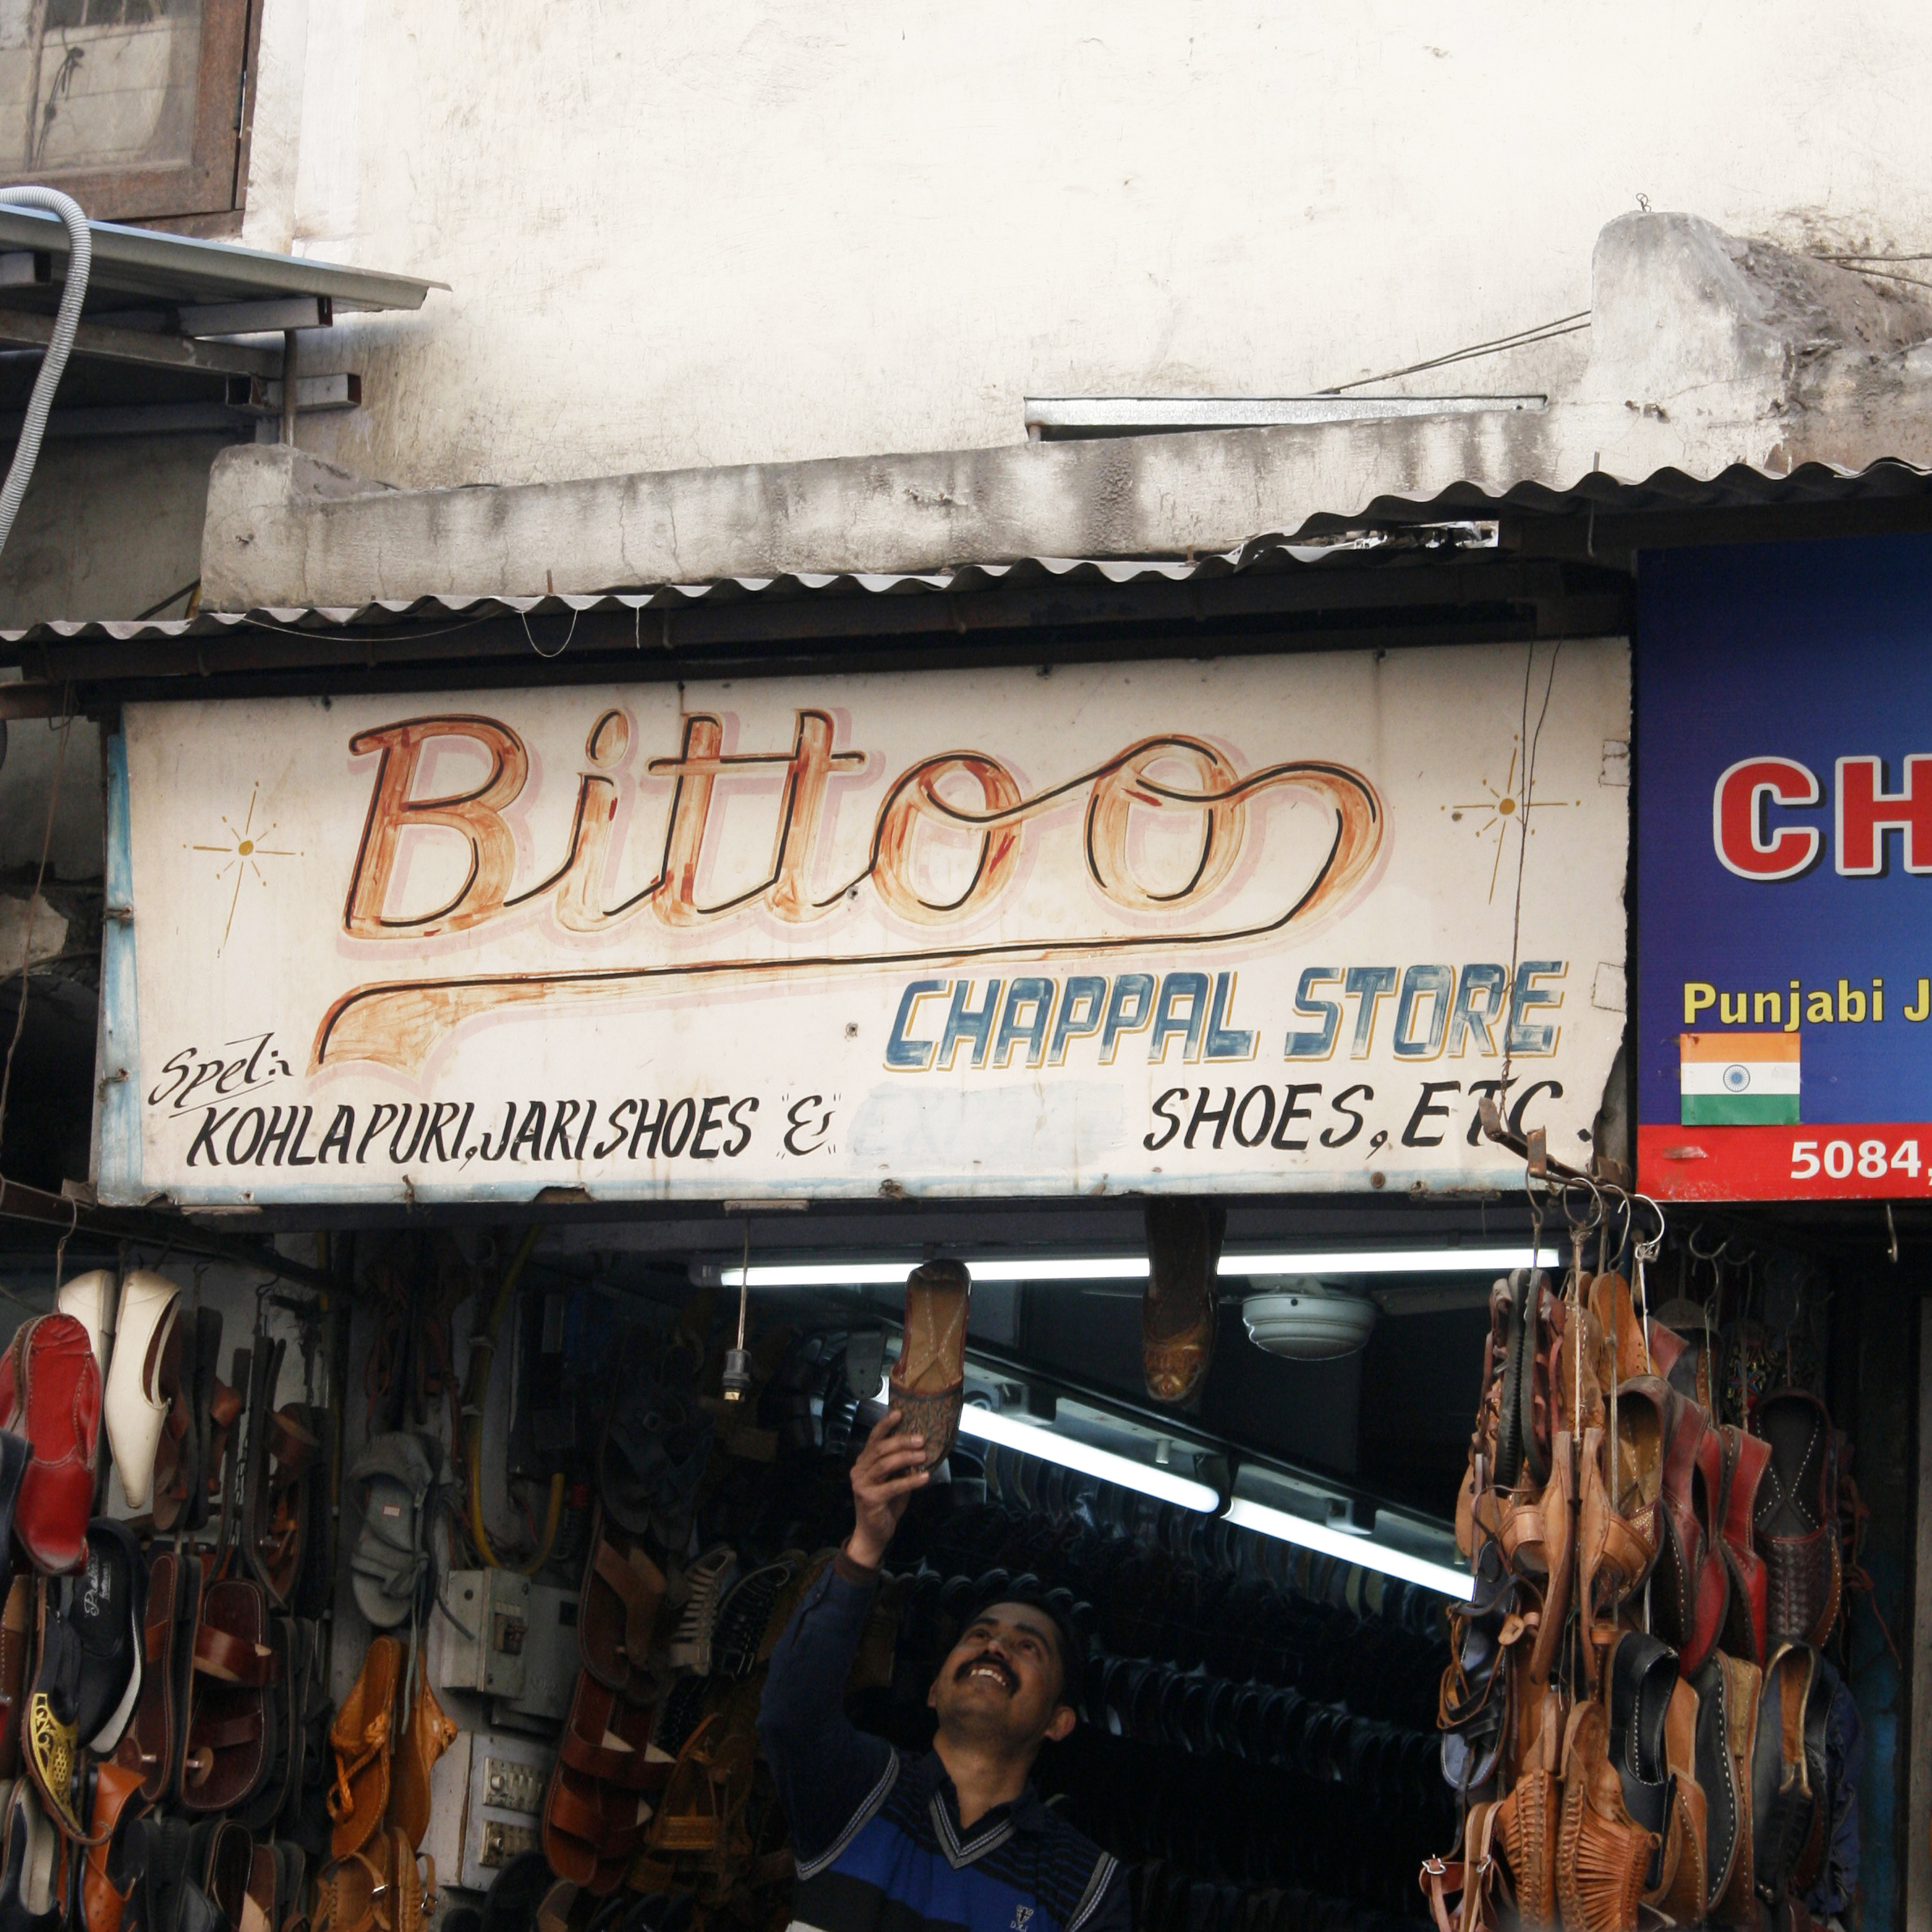 Bittoo Chappal Store